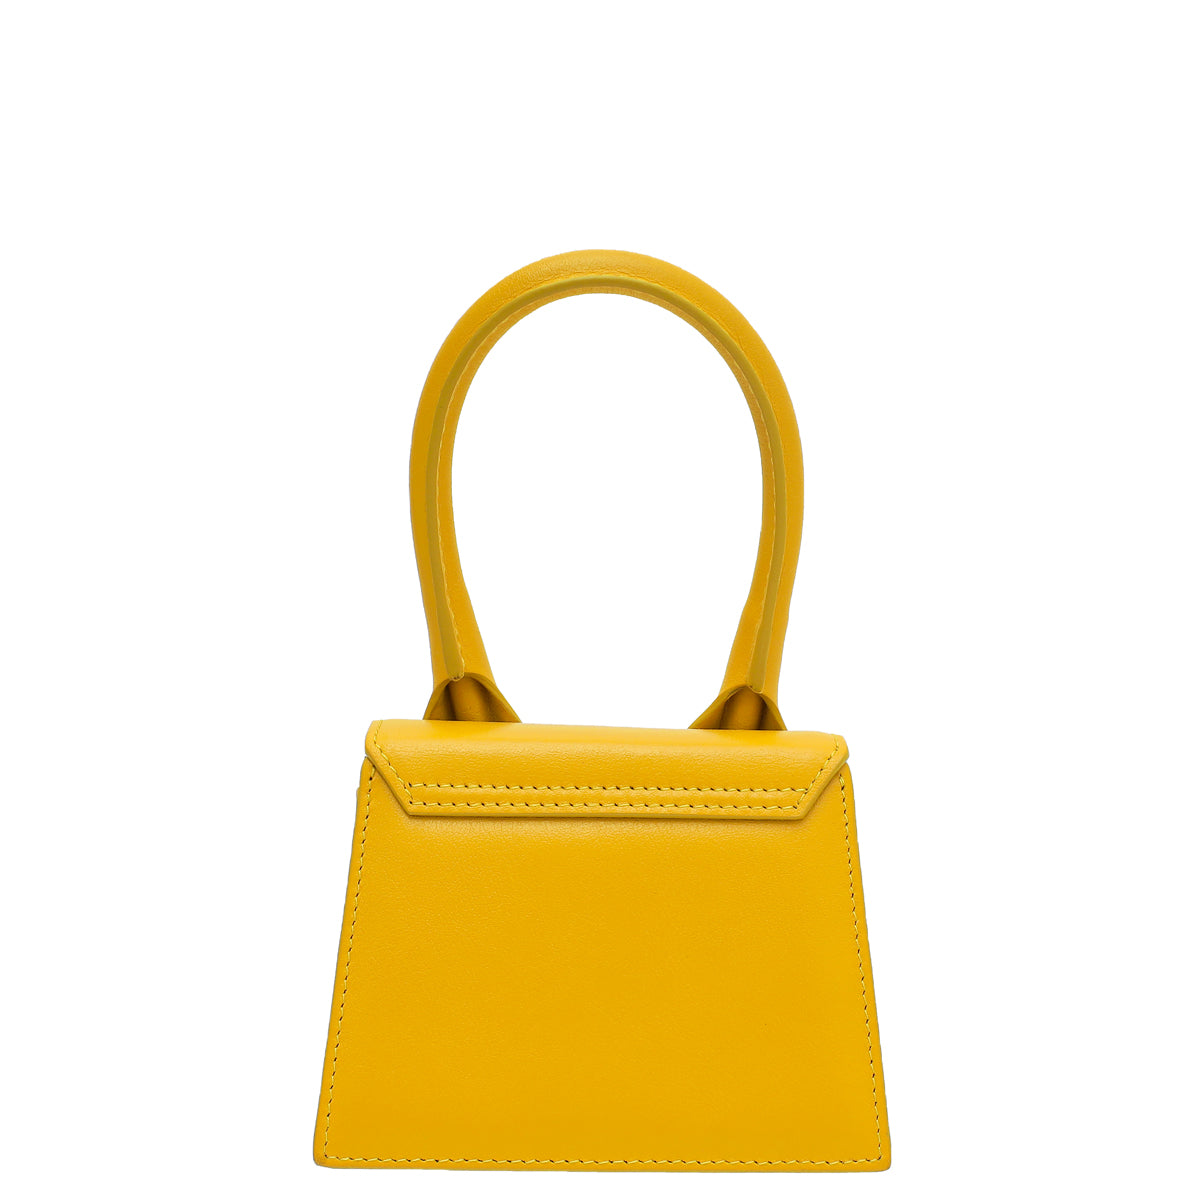 Jacquemus Yellow Le Chiquito Mini Bag